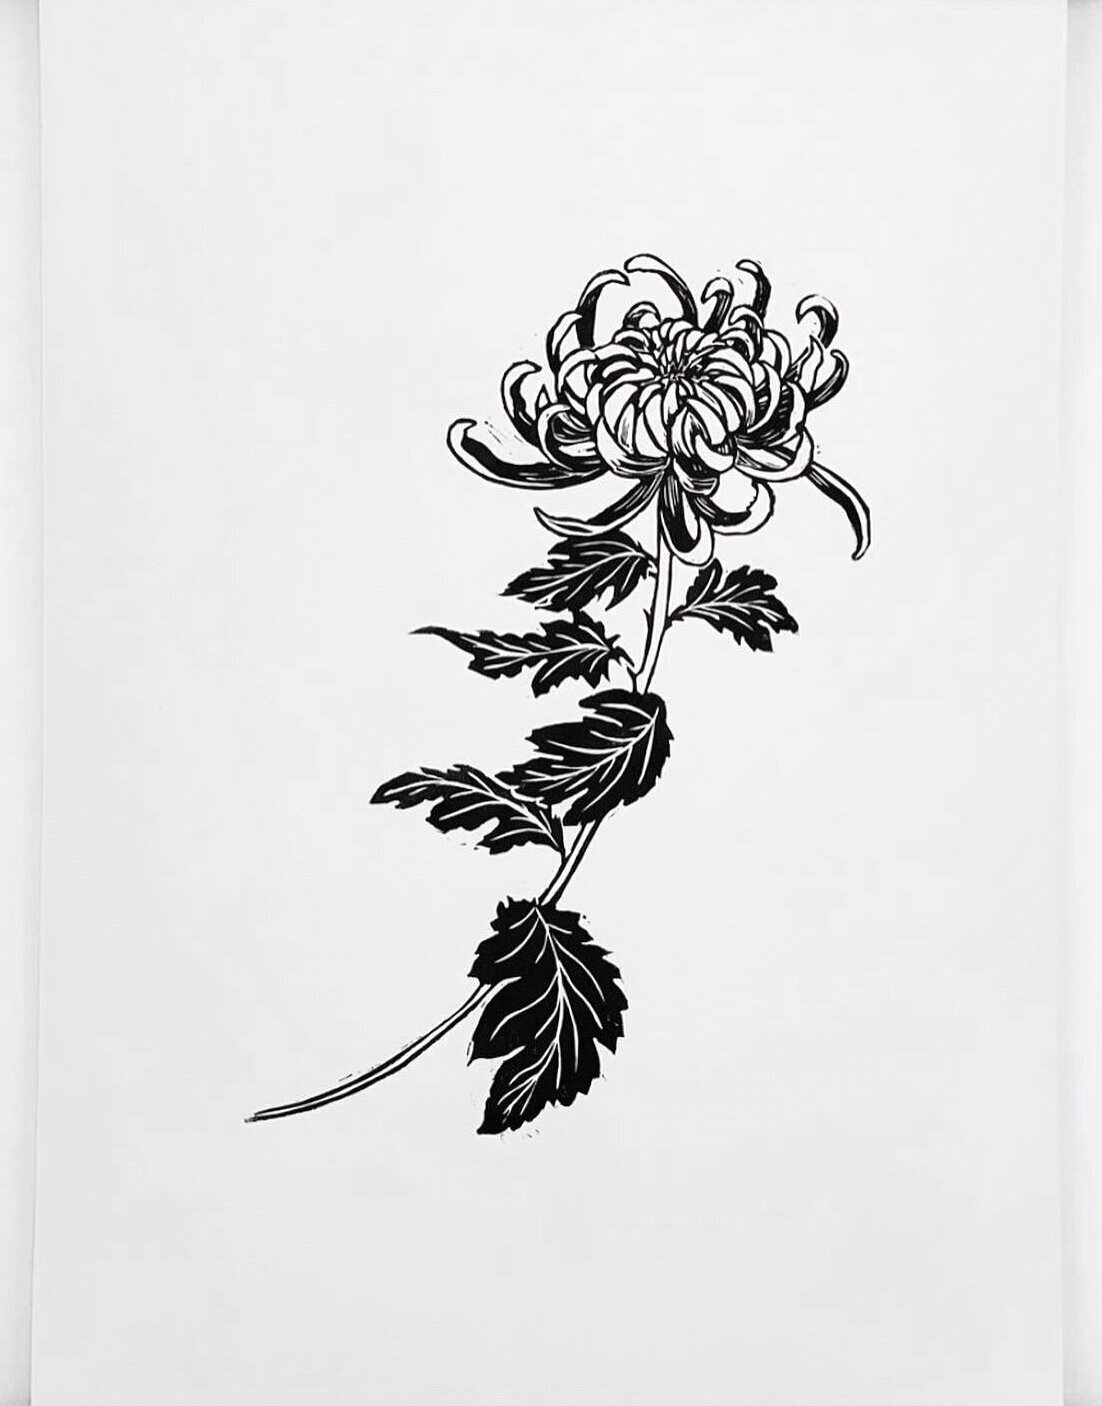 Japanese tattoo style sumi ink wash and watercolor chrysanthemum Art Print  by SebastianOrth | Society6